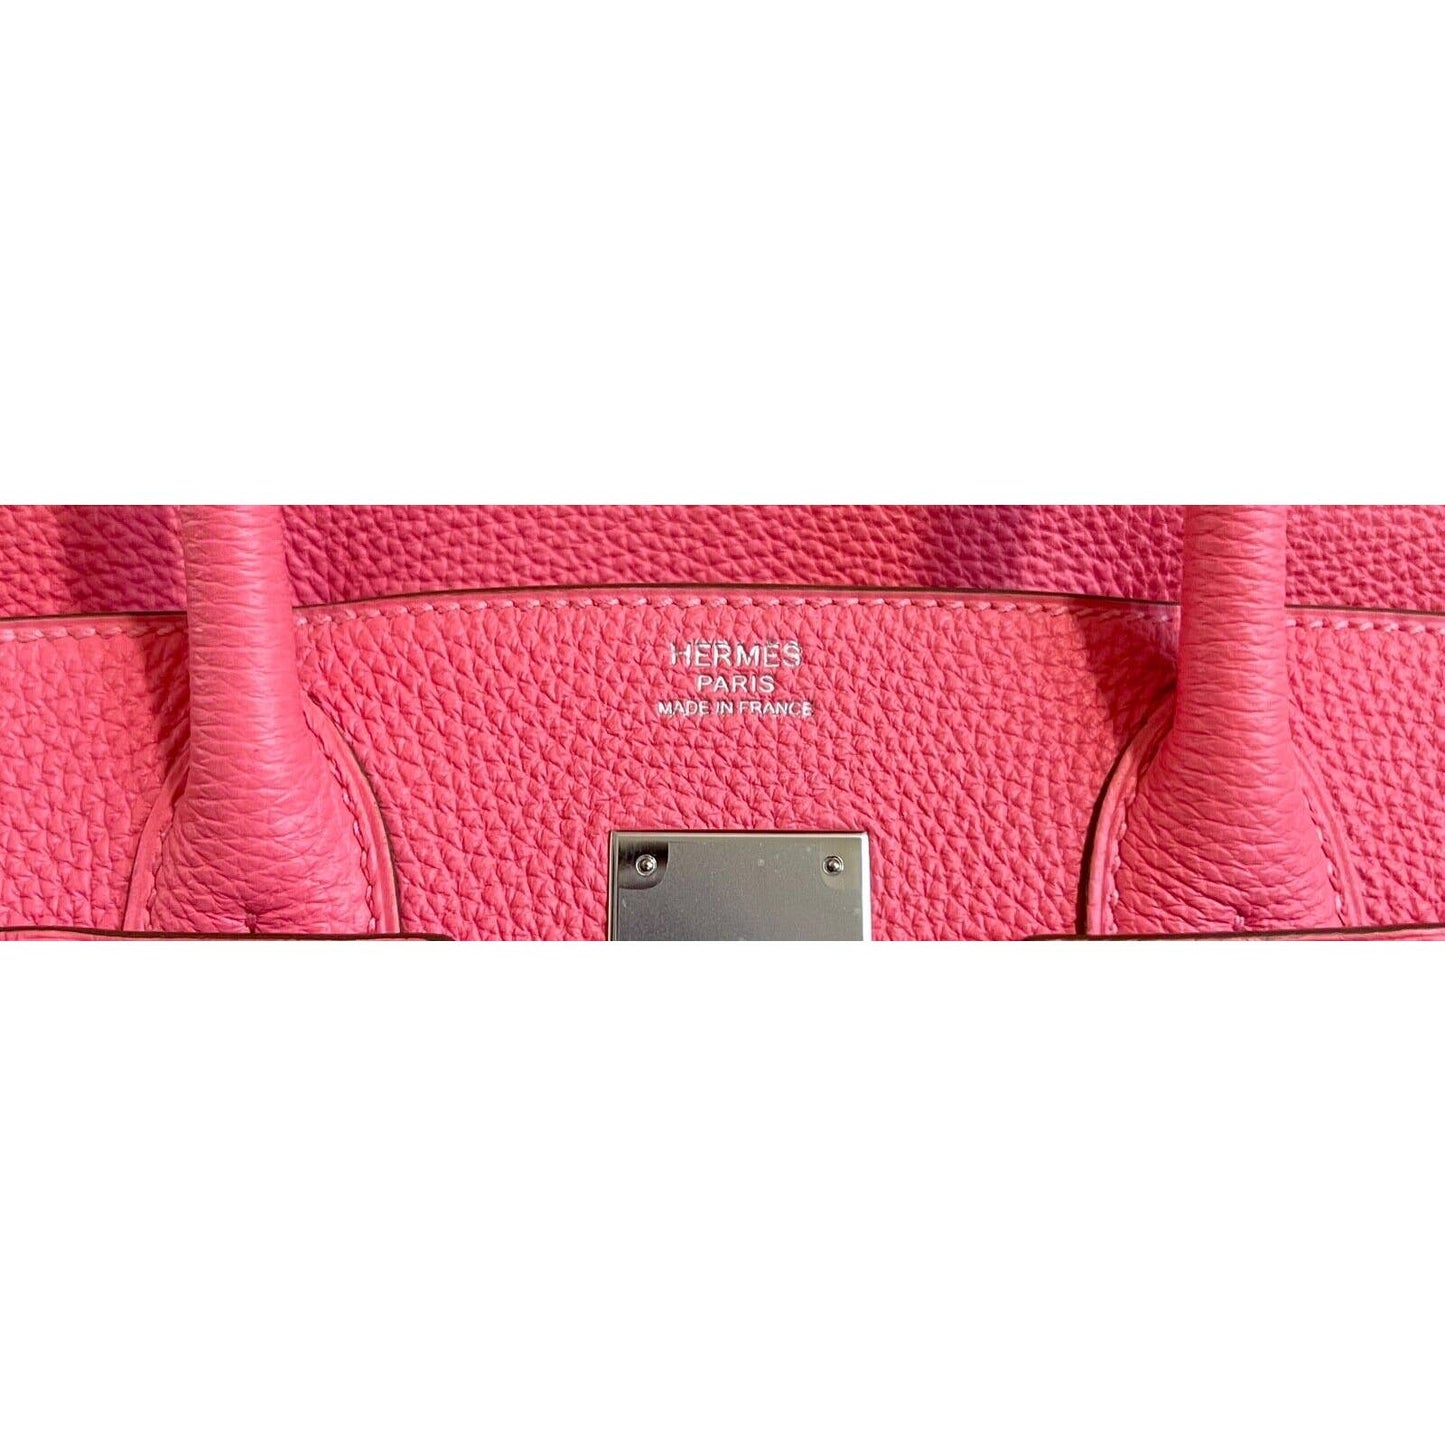 Hermès Birkin 30 Rose Lipstick Pink Togo Leather Palladium Hardware Handbag Bag